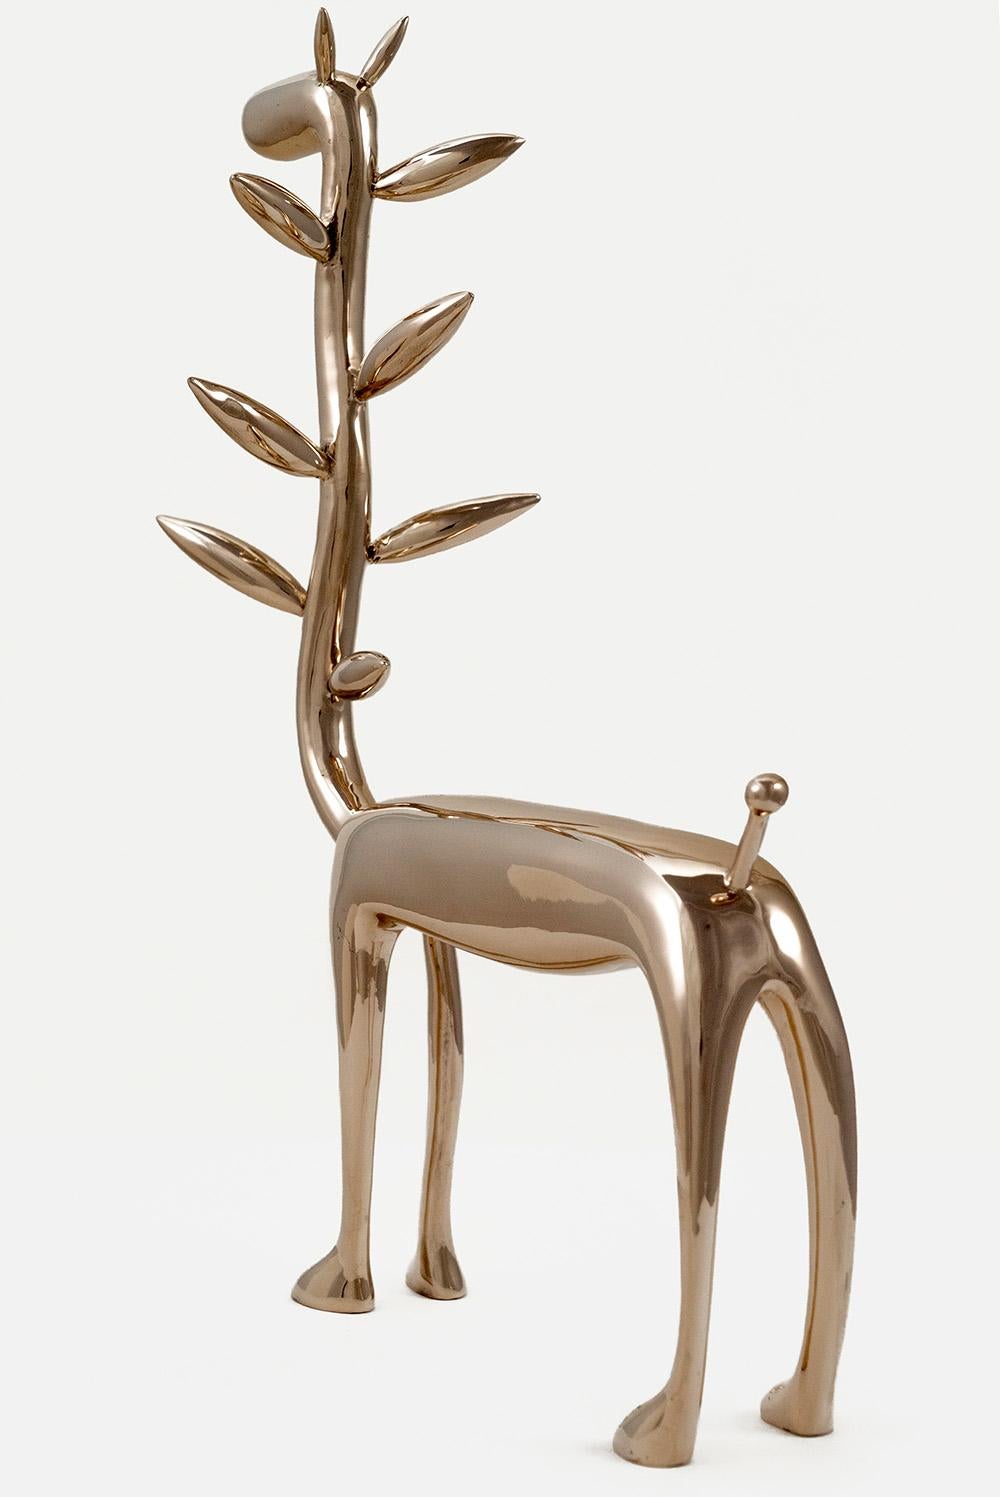 Plantiraffe by Marcelo M. Burgos - polished bronze sculpture, golden, giraffe - Contemporary Sculpture by Marcelo Martin Burgos